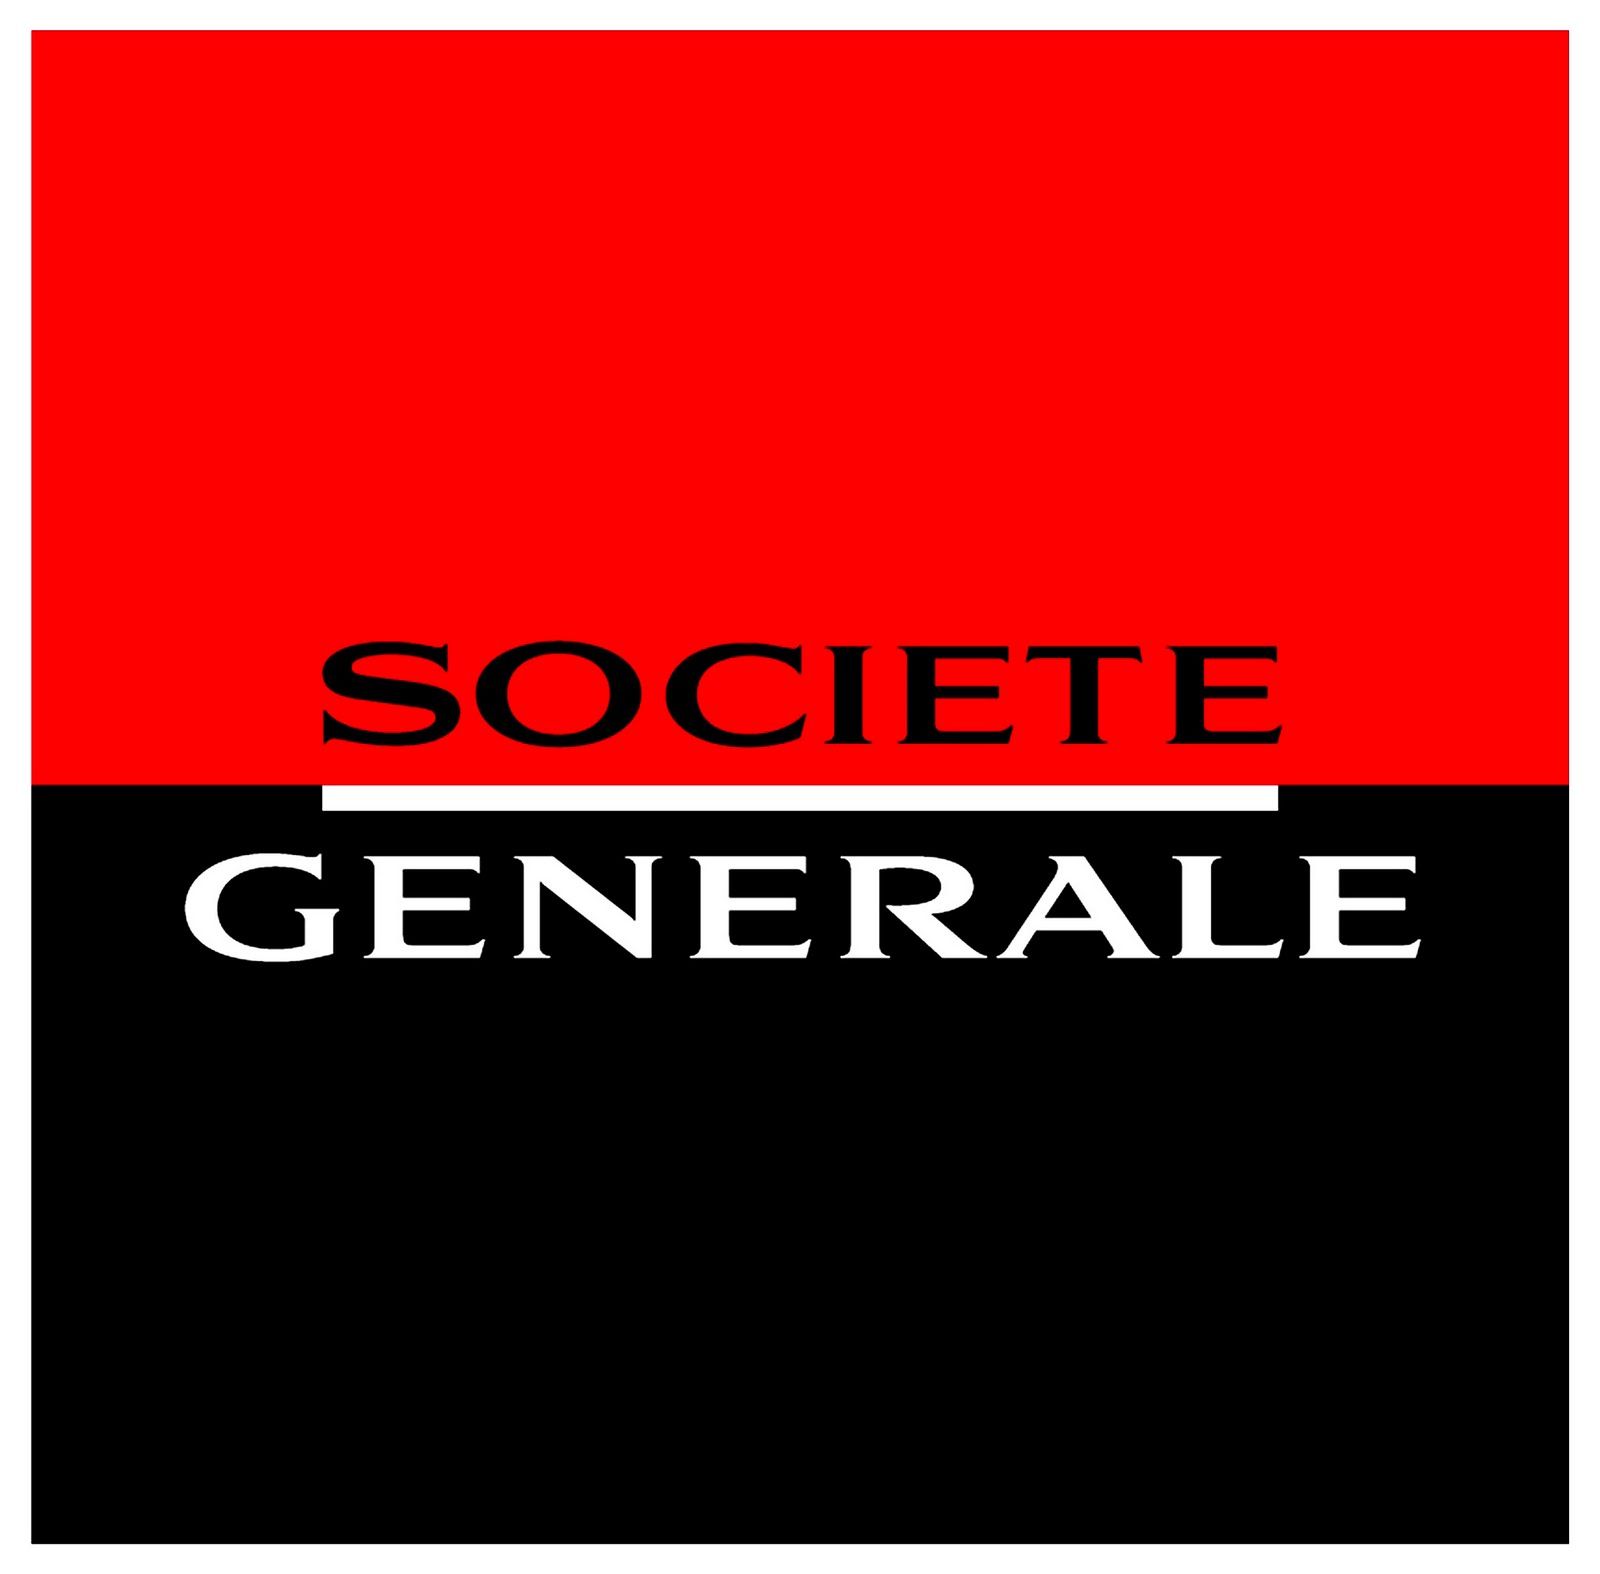 Billboard TV Societe Generale by Thierry Legrand